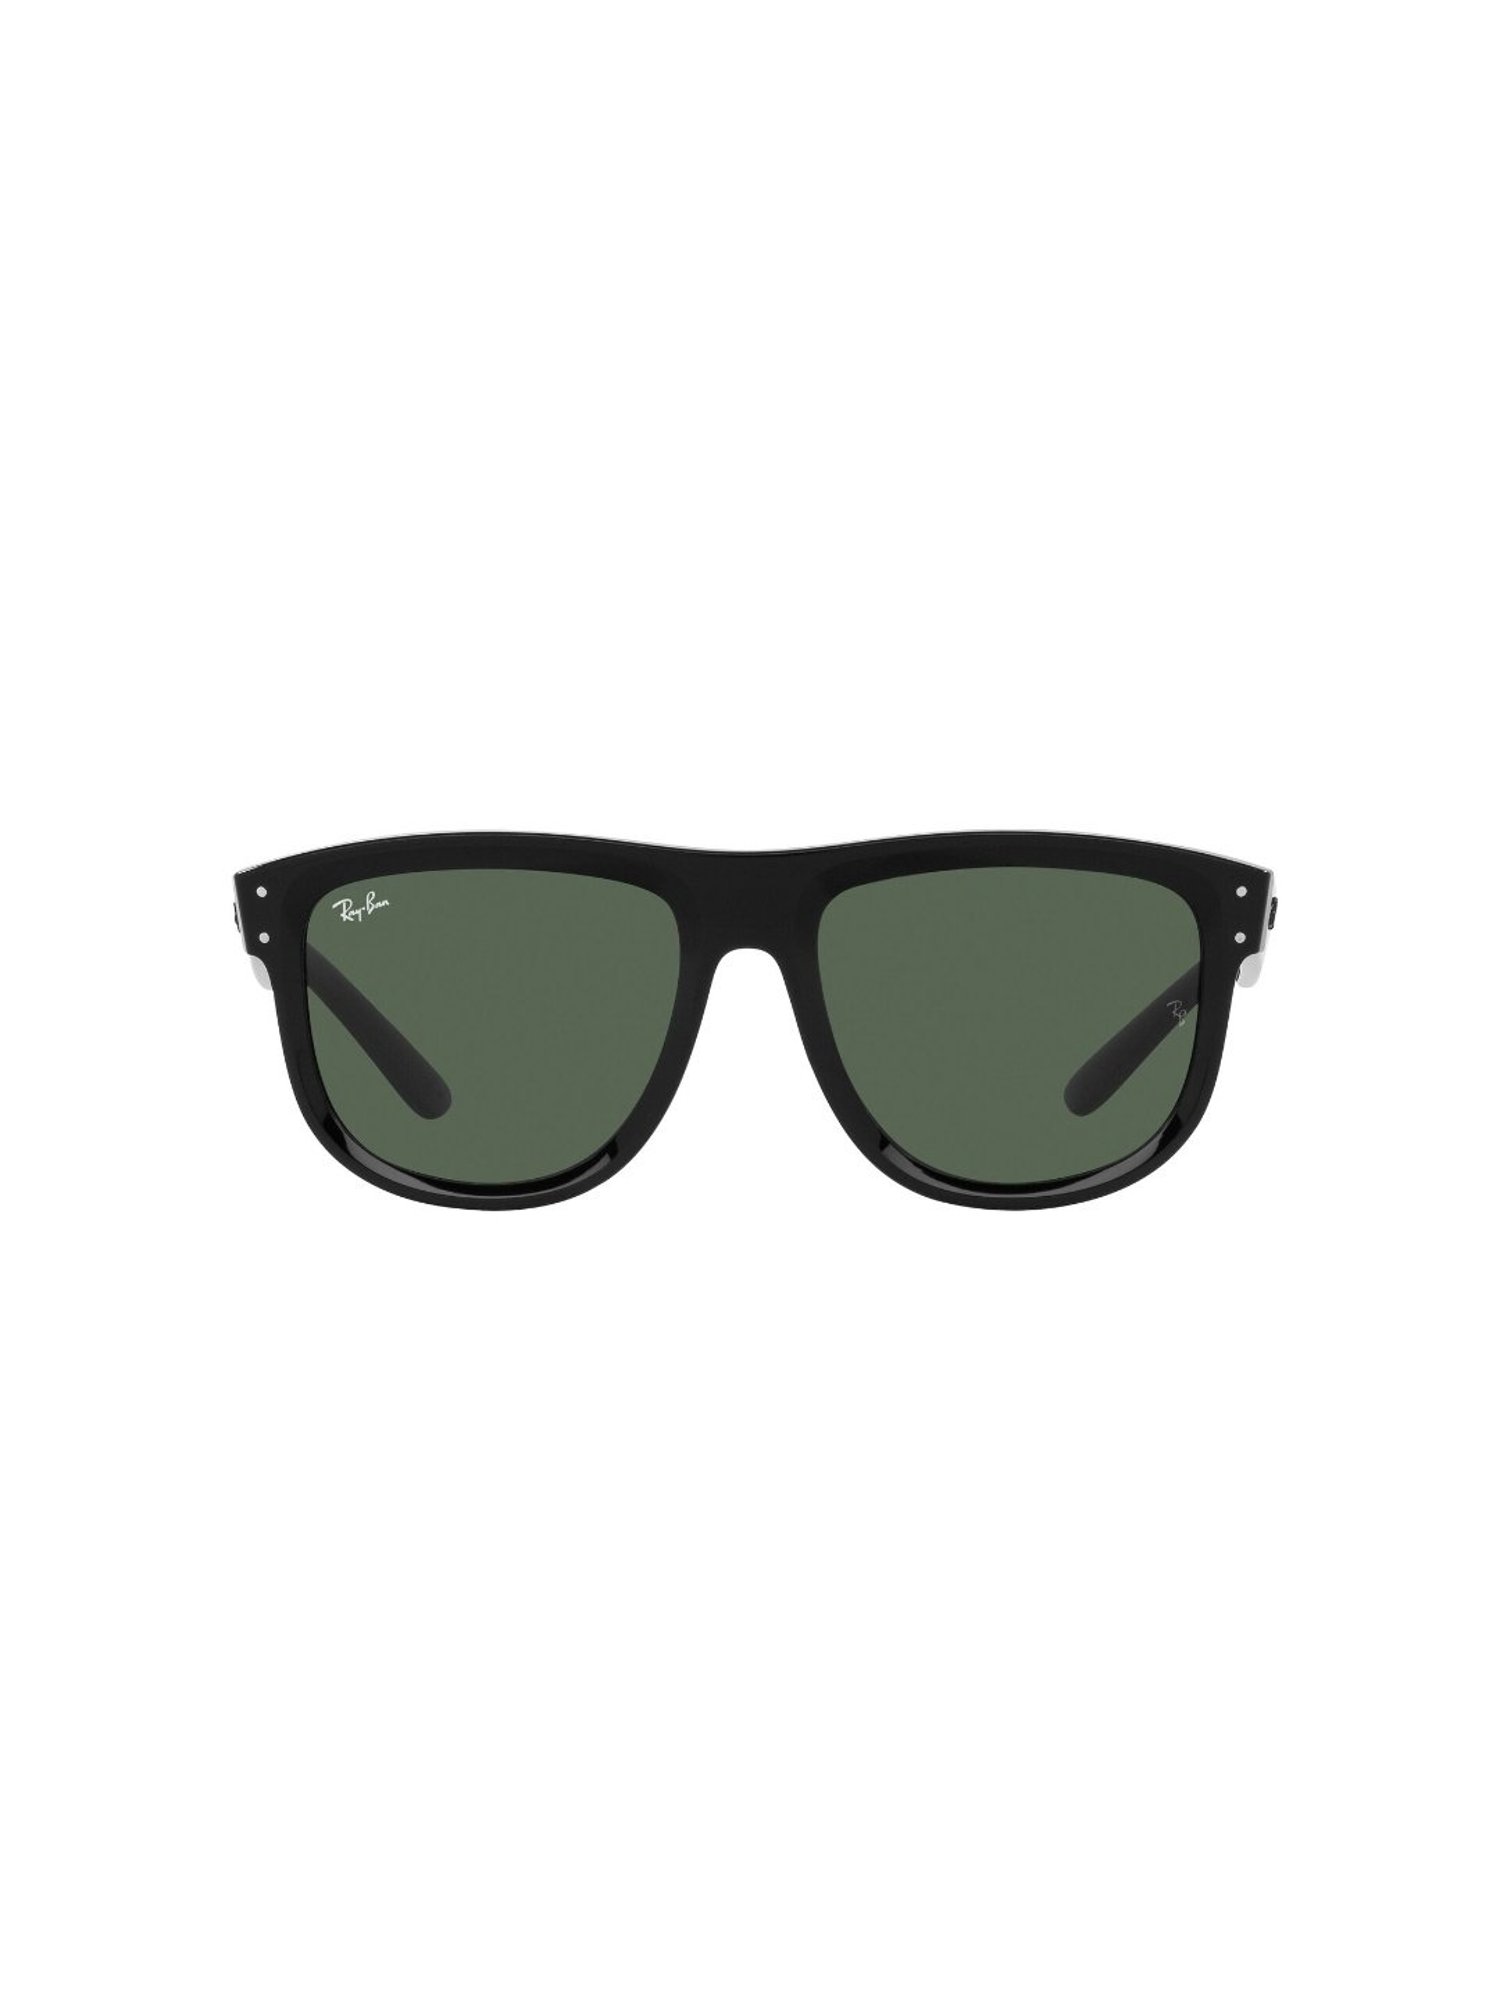 Ray-Ban RB4165 Justin Classic 54 Dark Grey & Black Sunglasses | Sunglass  Hut USA